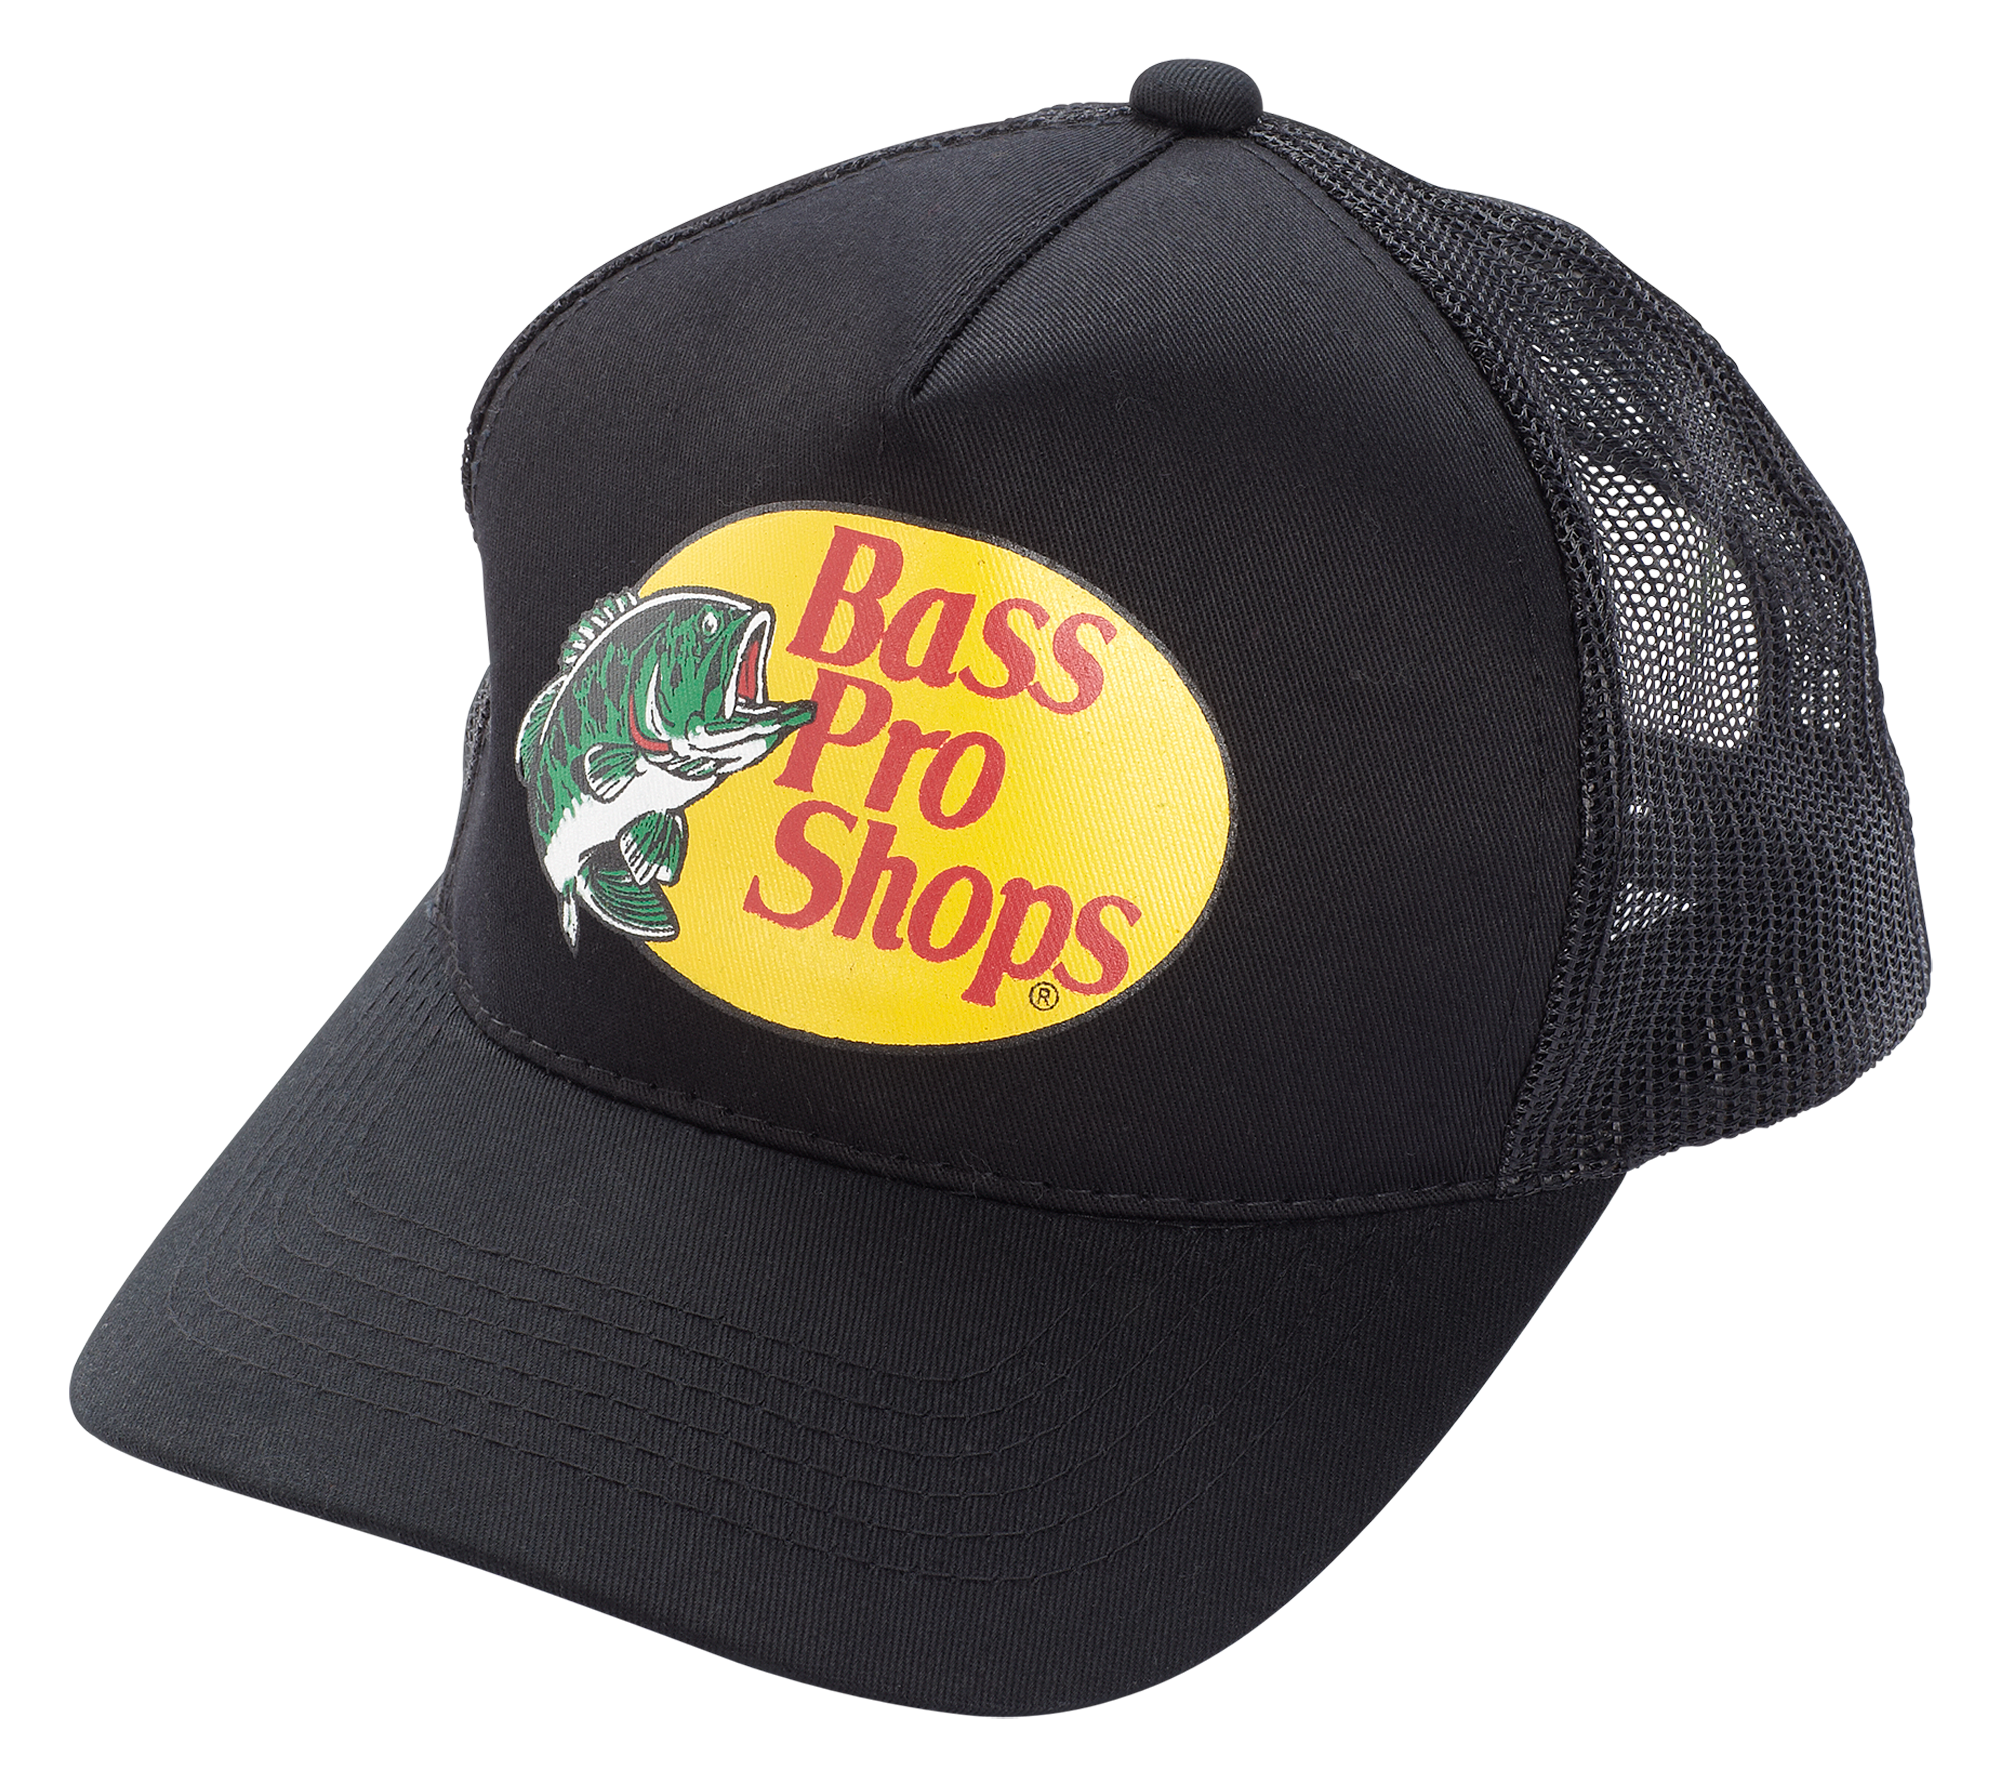 Bass Pro Shops Shop All